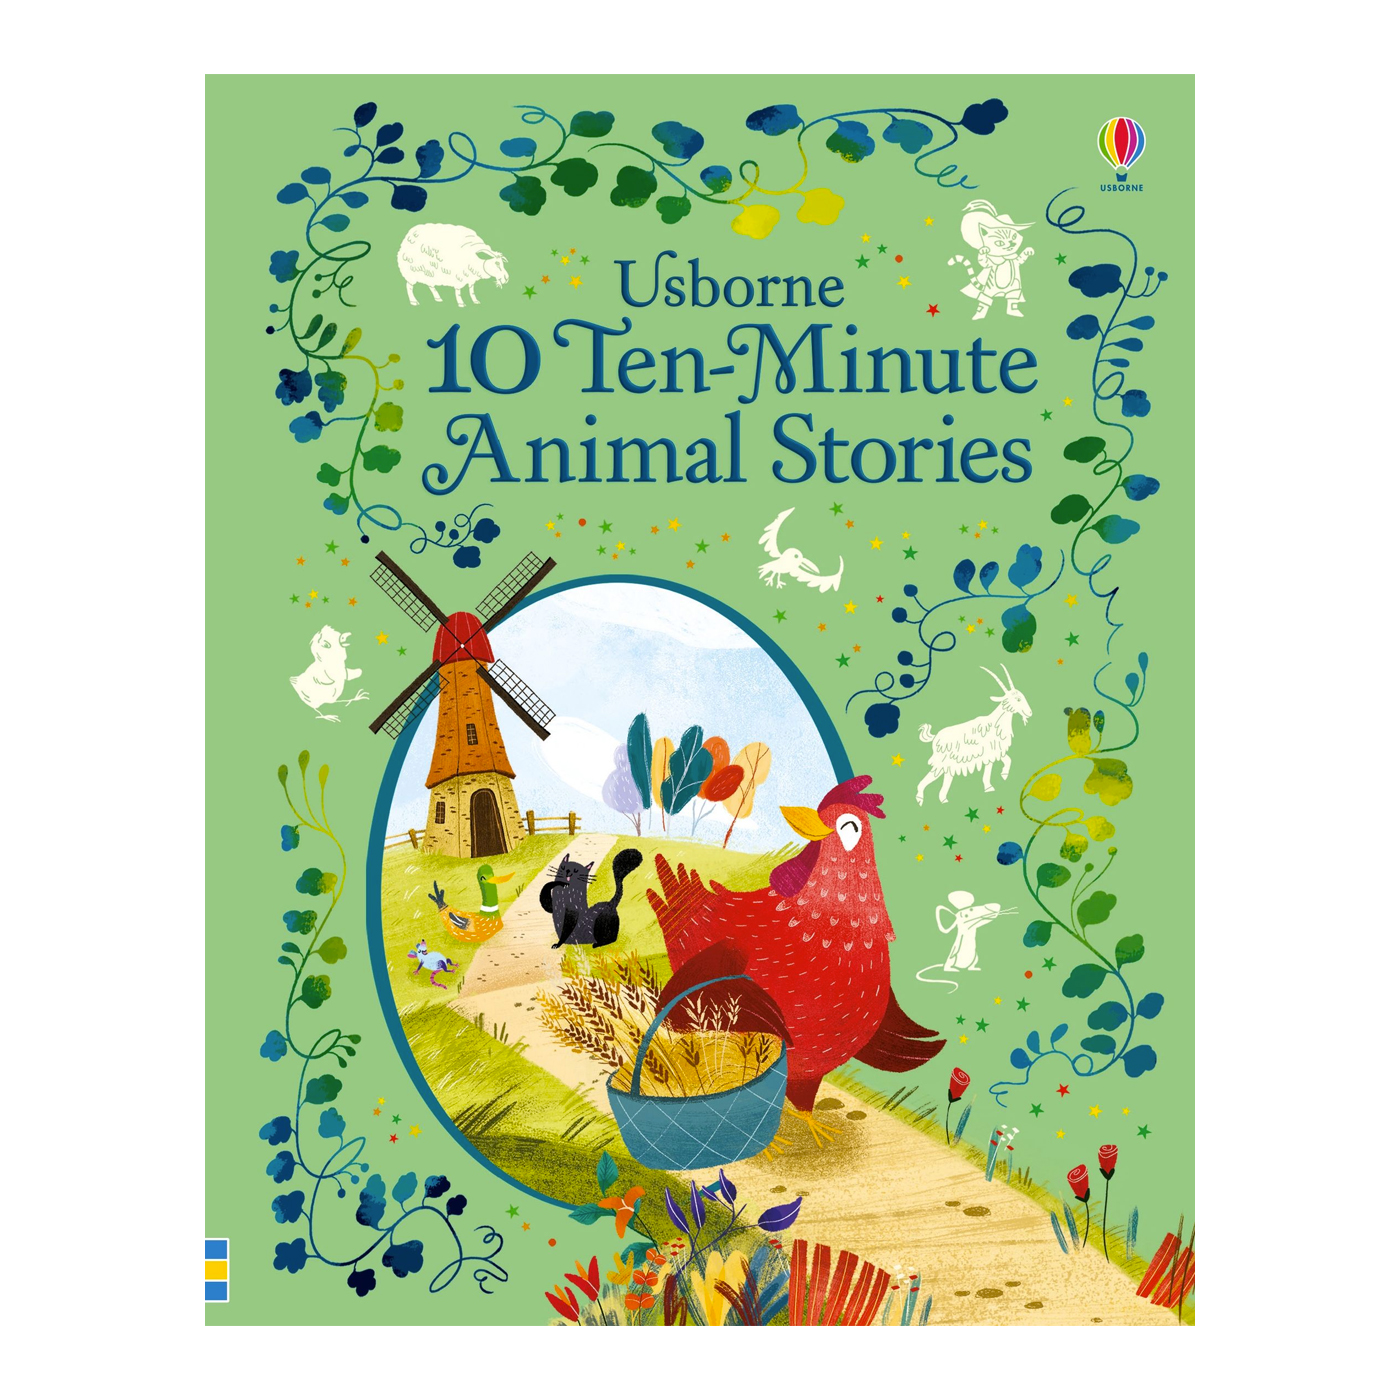  10 Ten-Minute Animal Stories